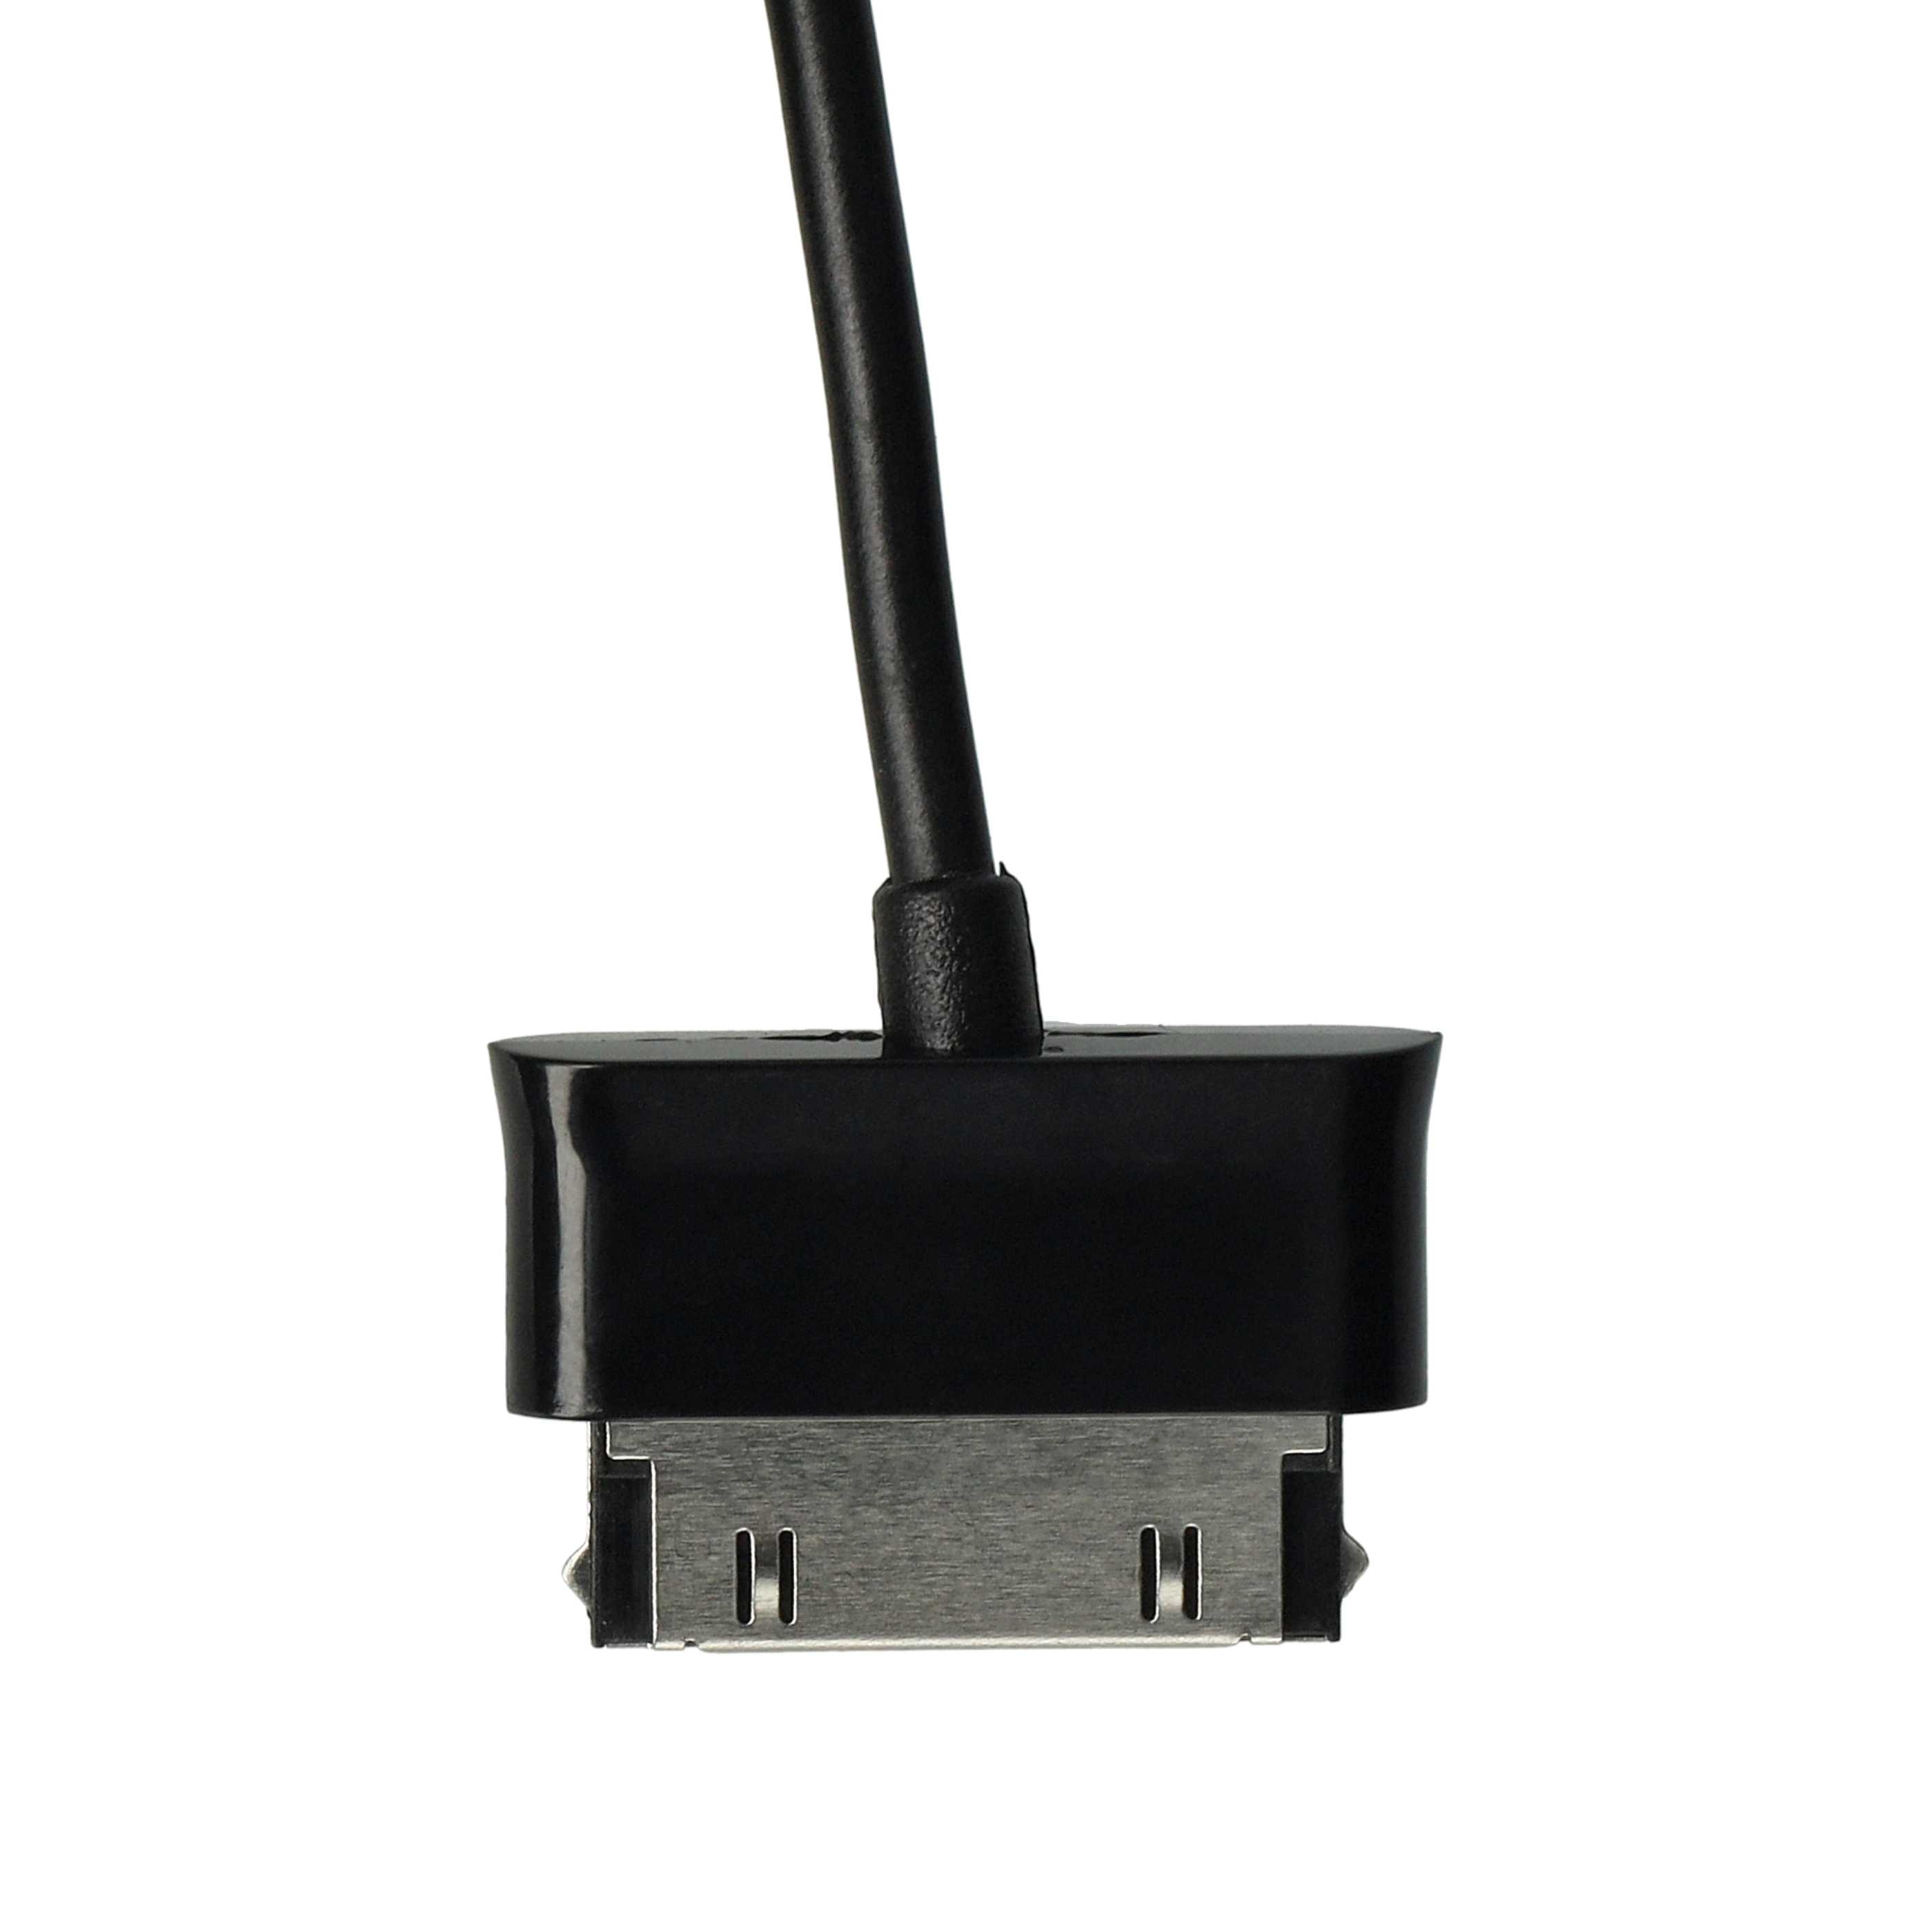 Kabel USB do ładowania tabletu Samsung zamiennik Samsung ECC1DPU